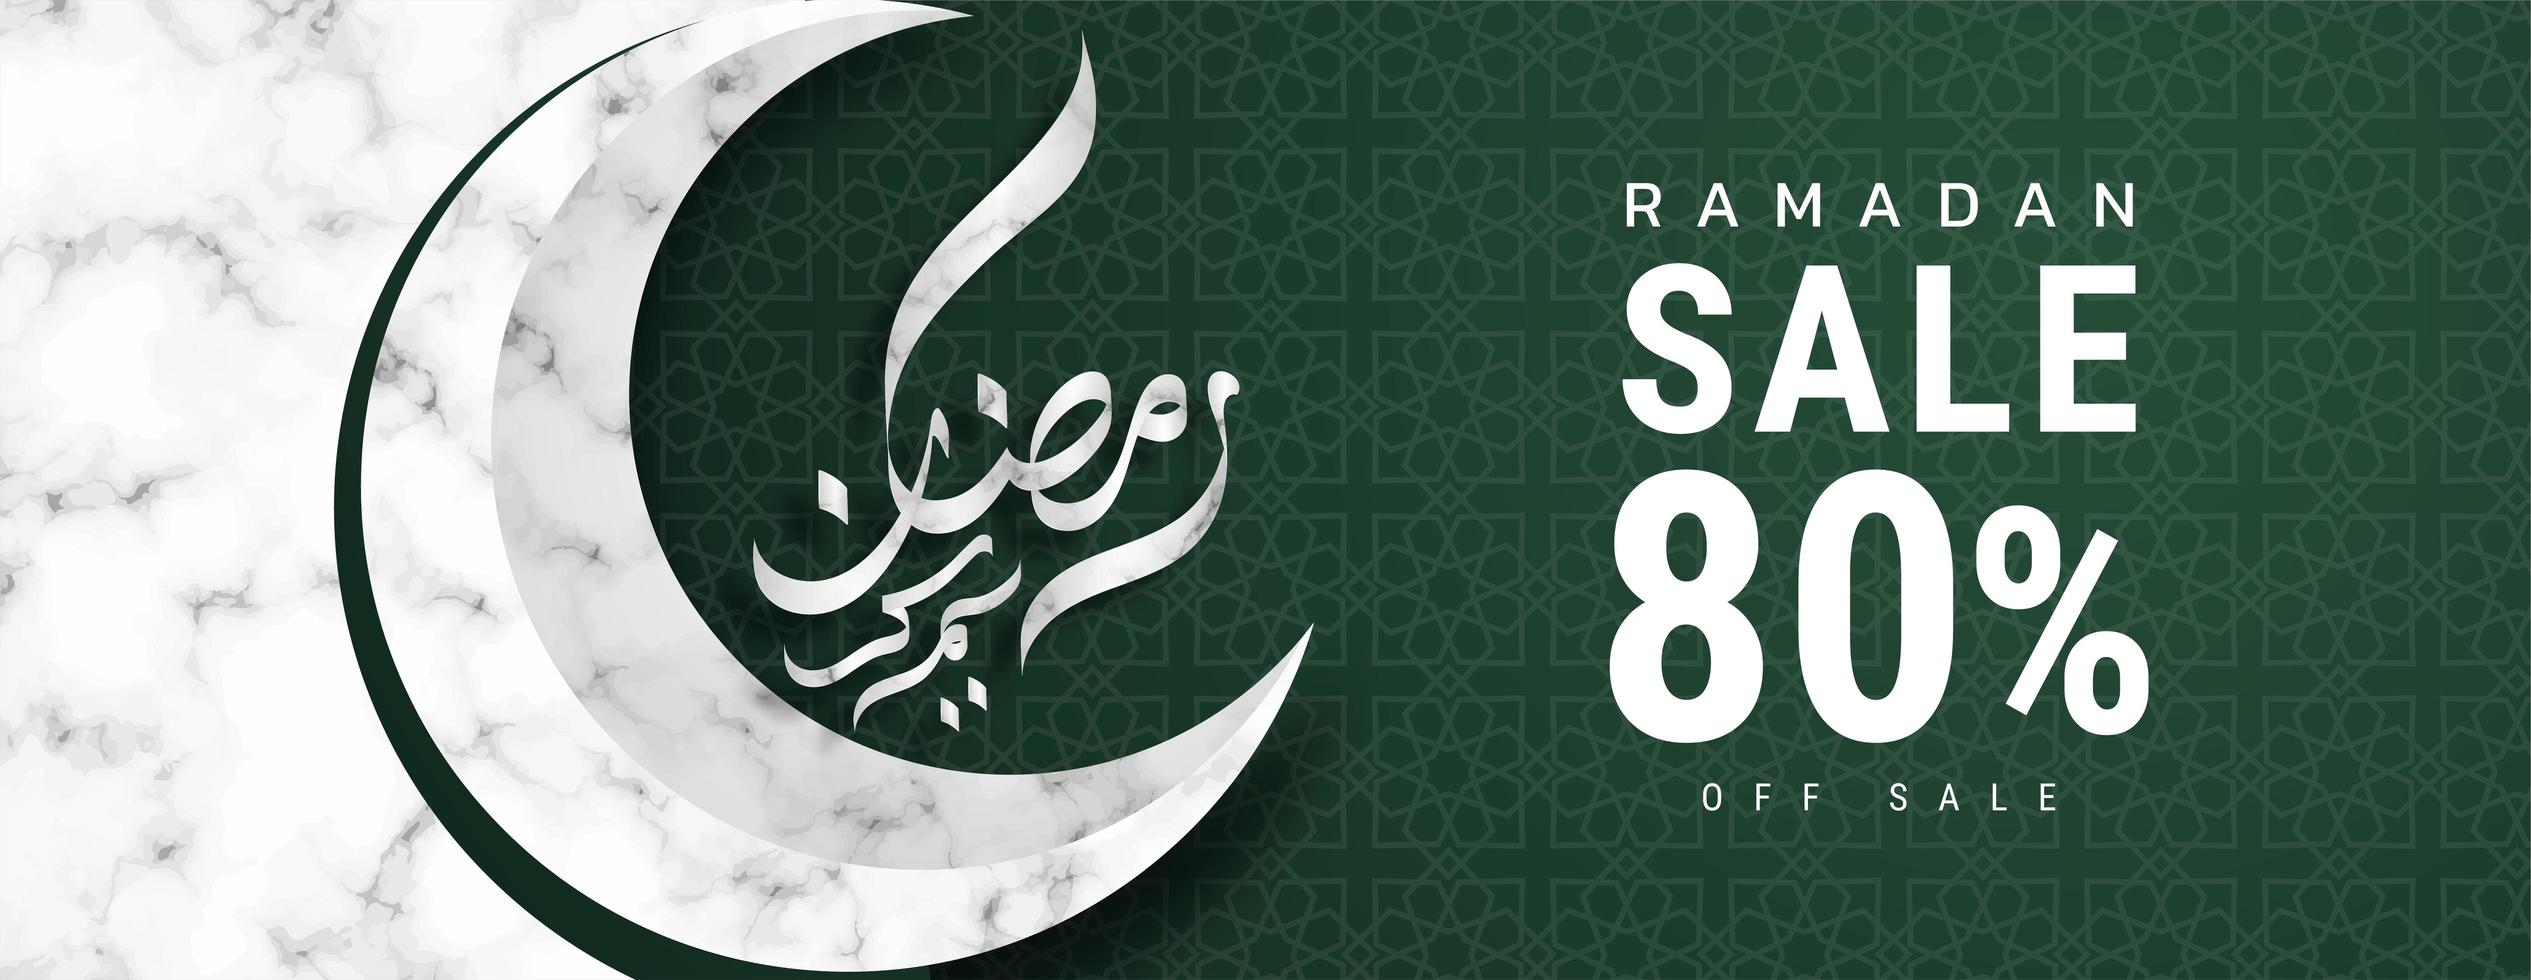 Ramadan Kareem Mármore branco Lua crescente Venda banner vetor